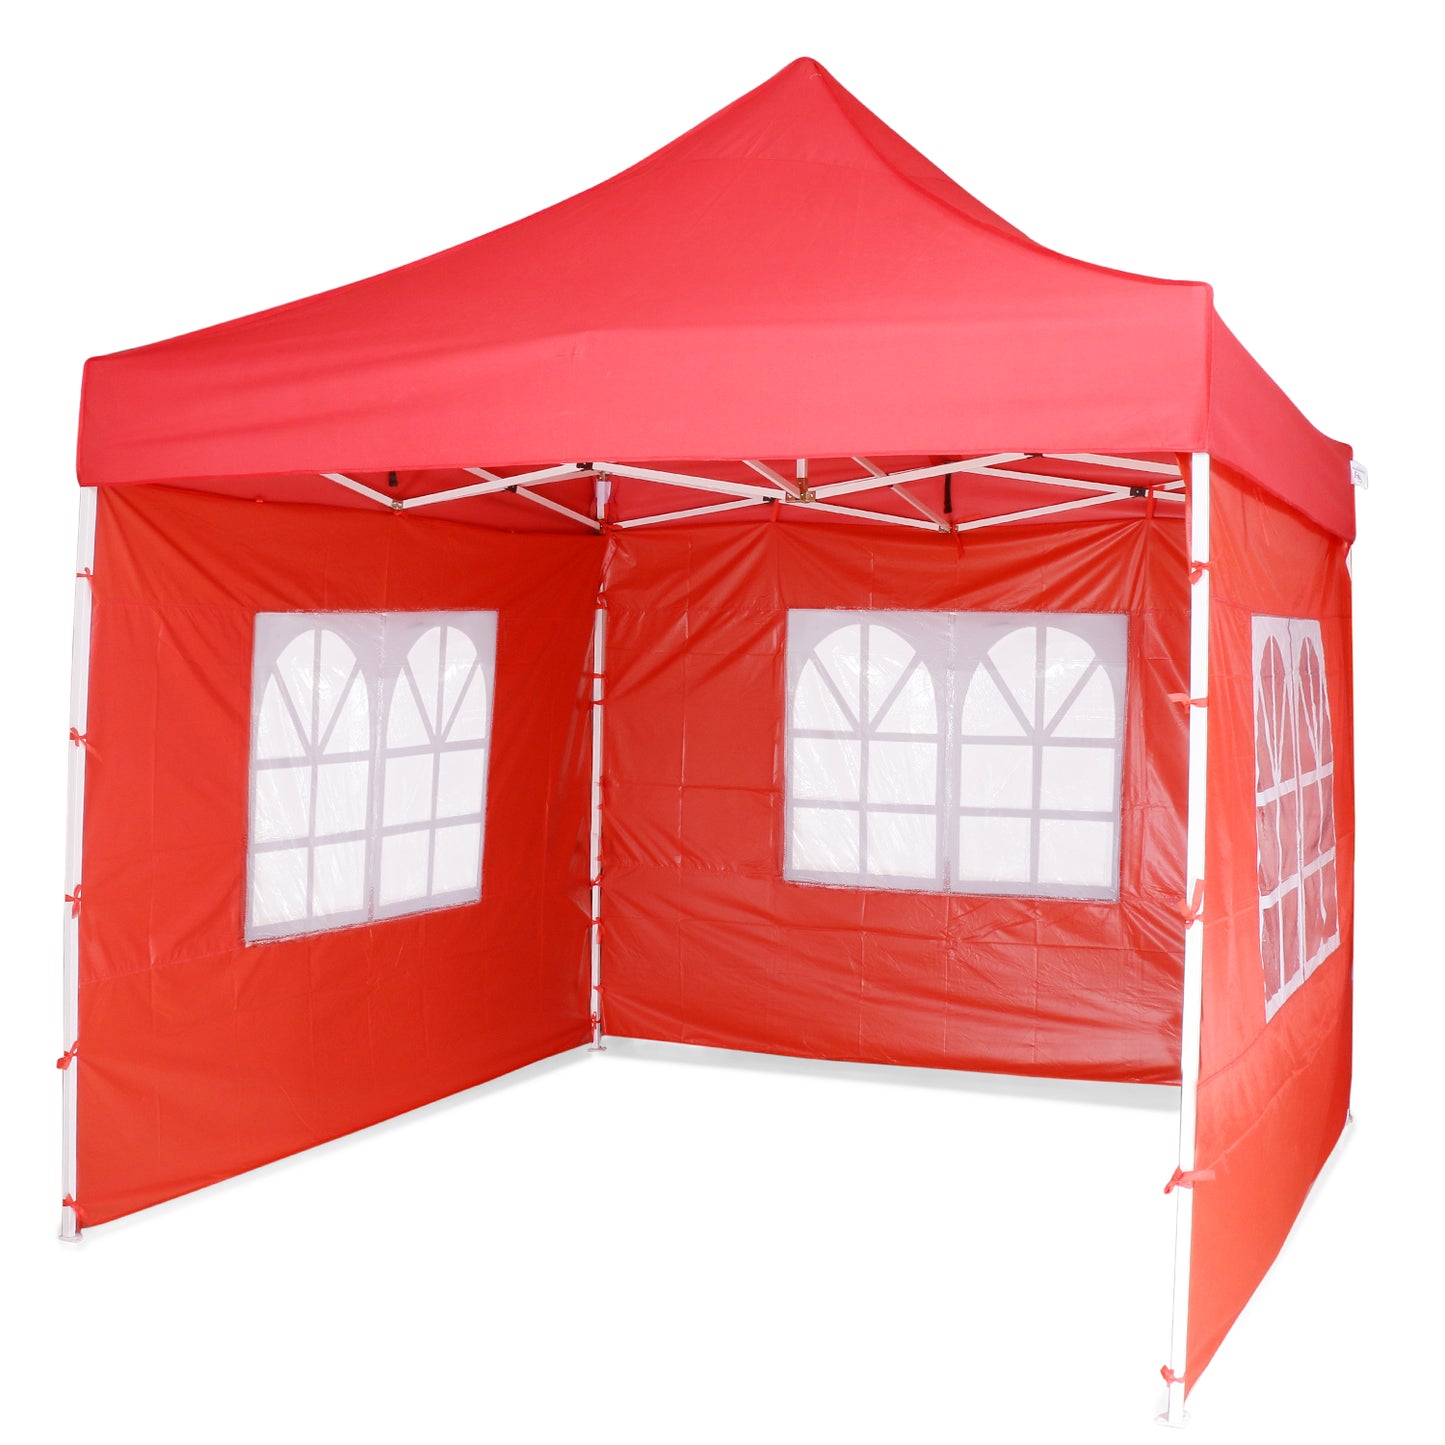 Gazebo Tent 10 x 10 feet with European Side cover - Regular Quality